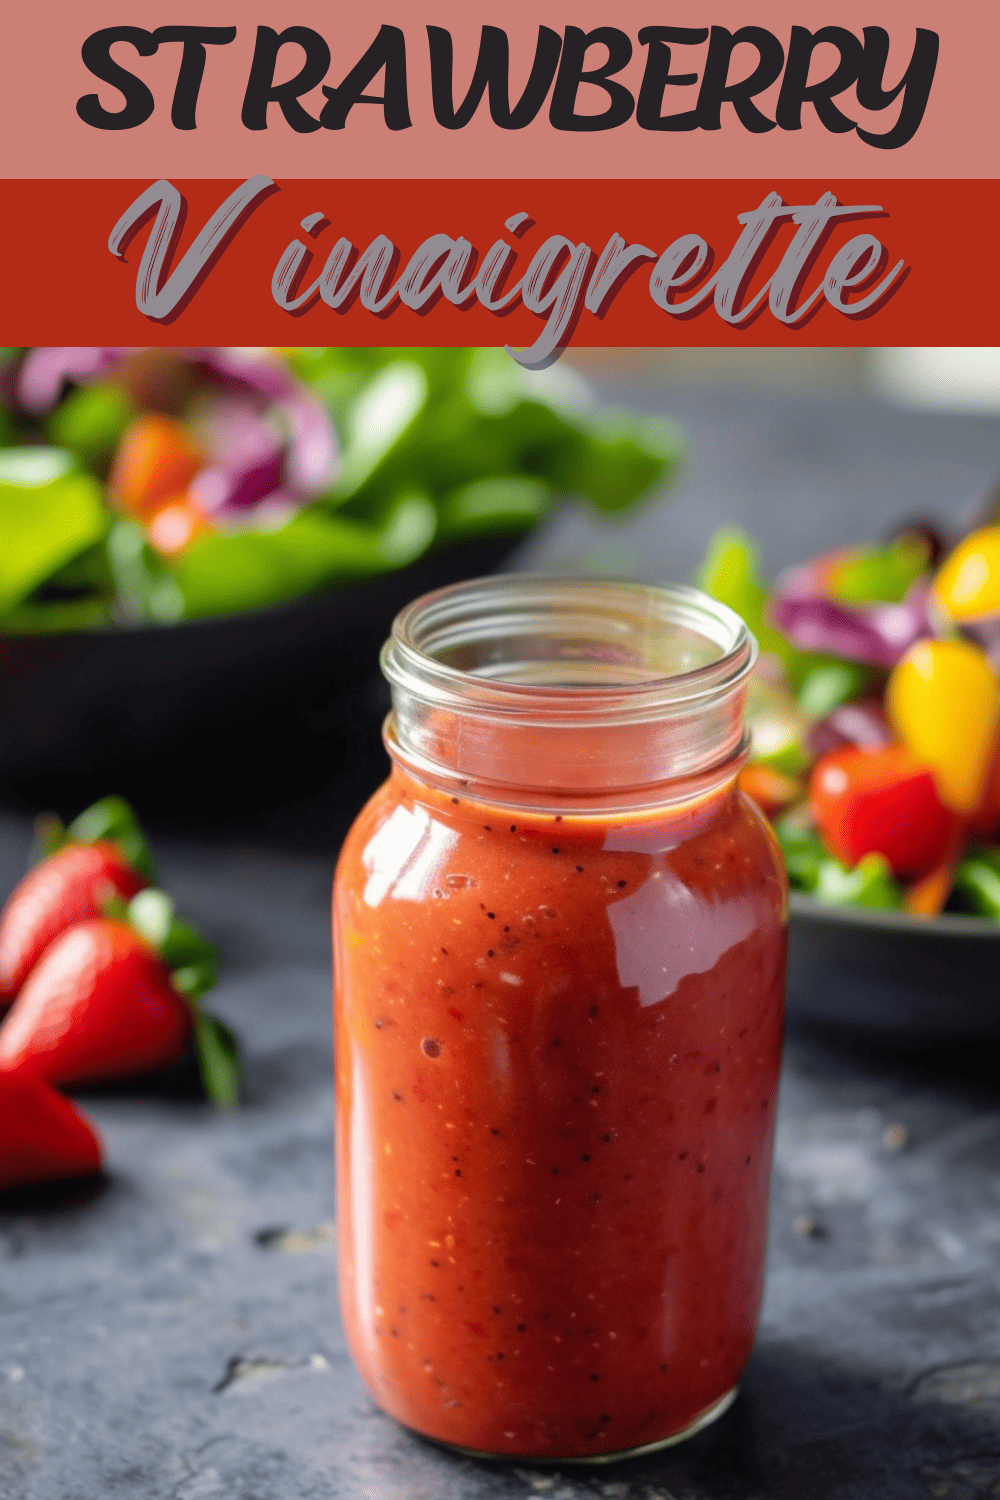 Strawberry Vinaigrette Recipe